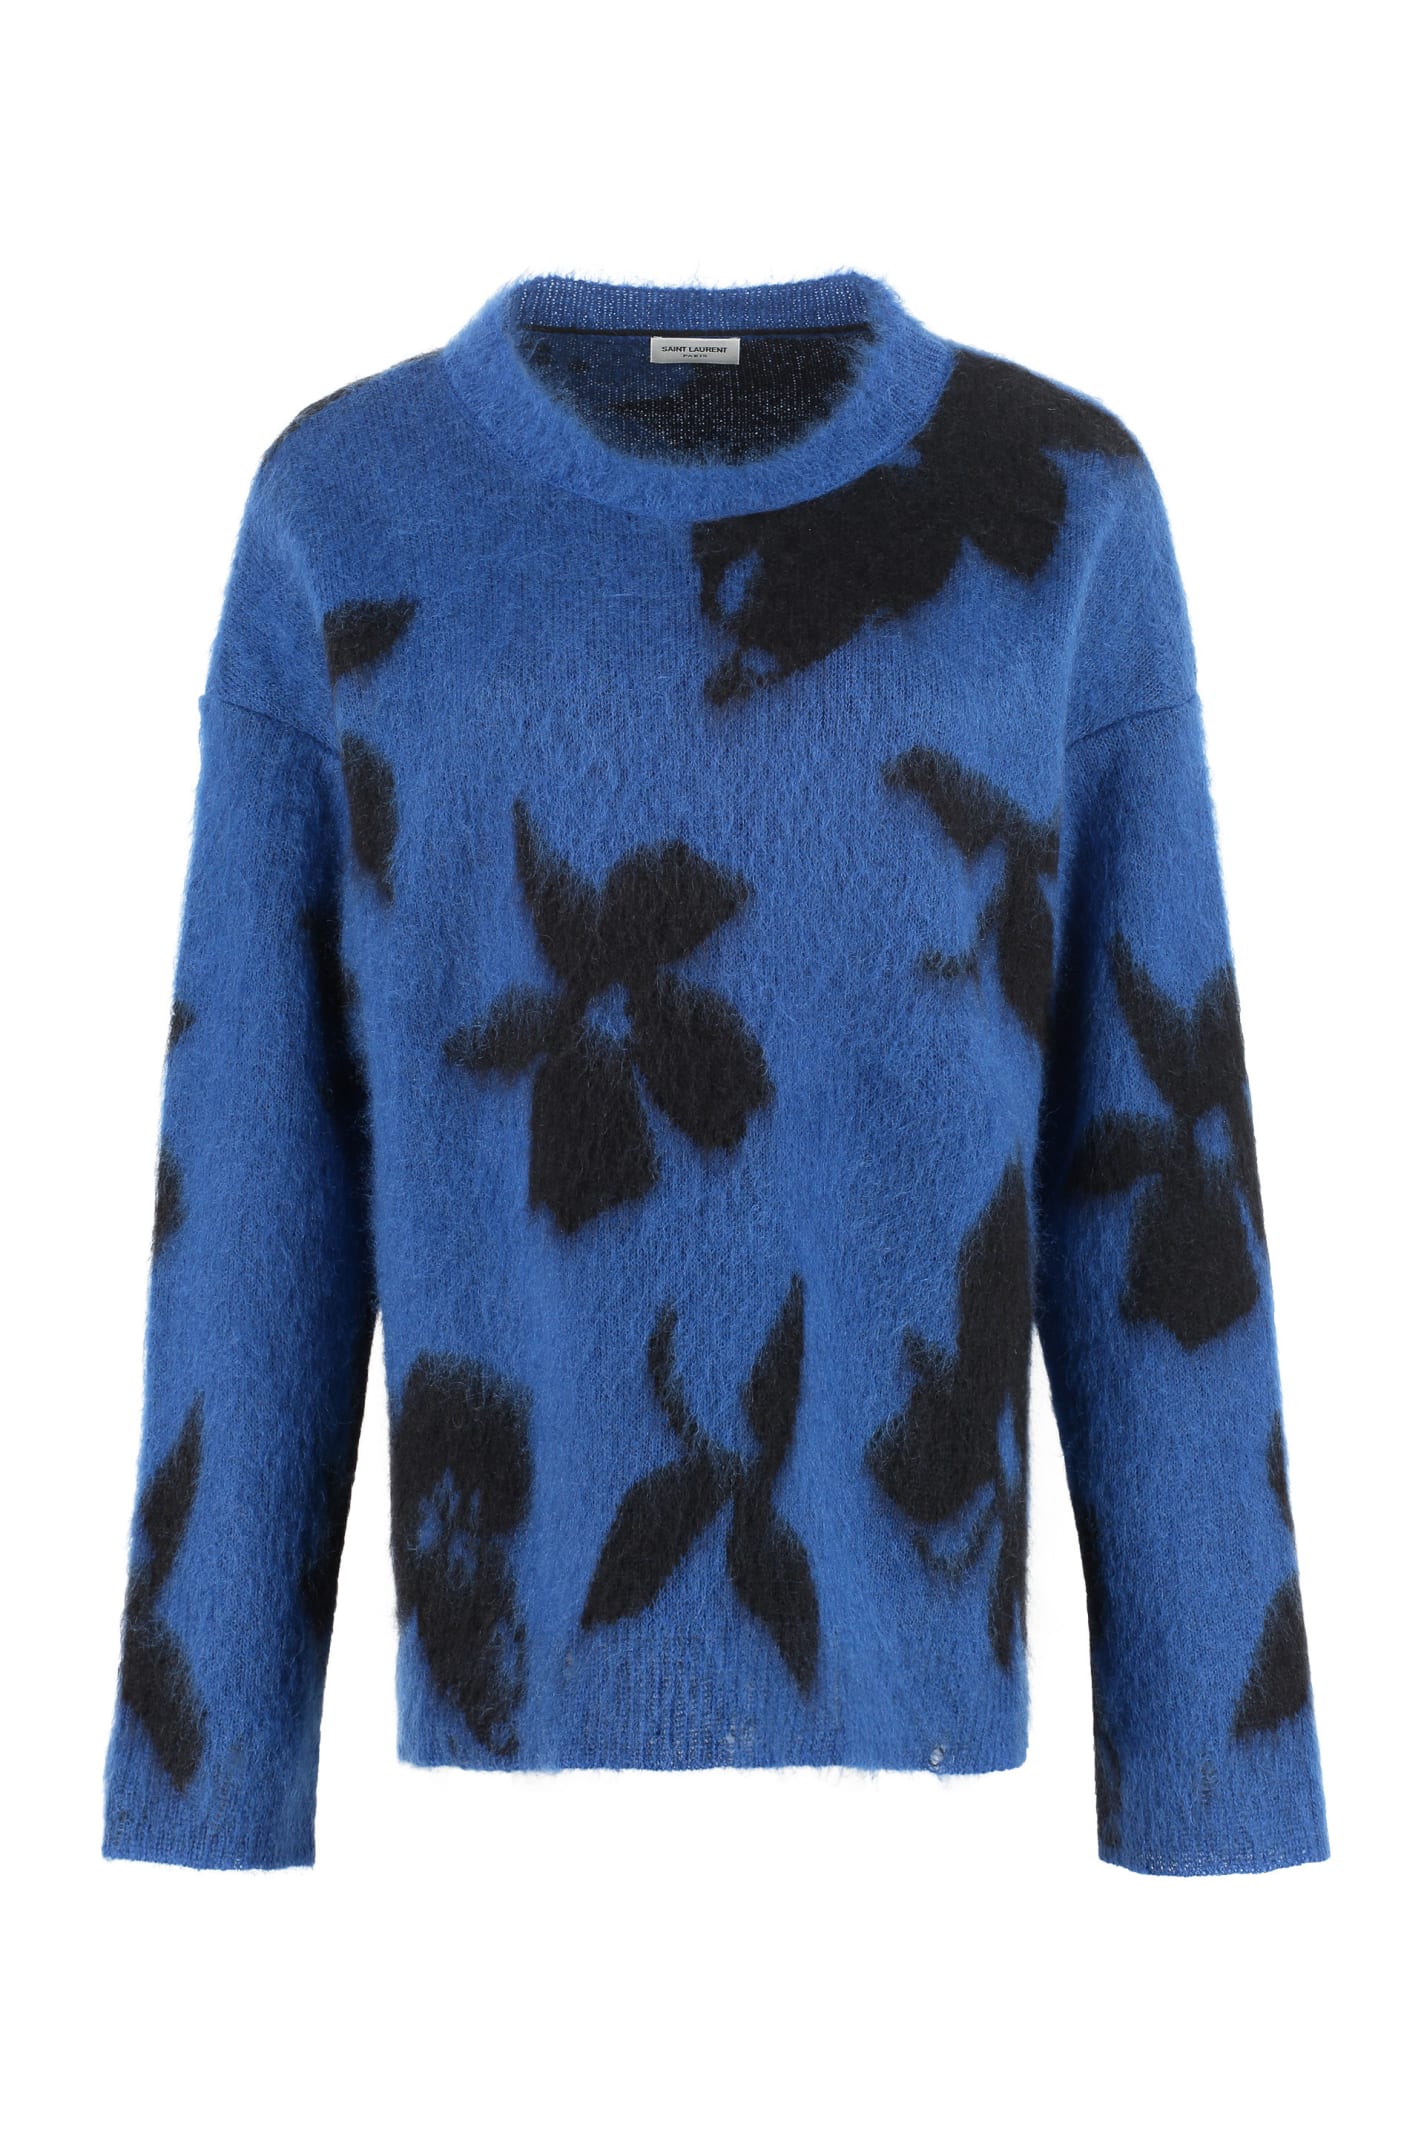 Saint Laurent Mohair Blend Sweater